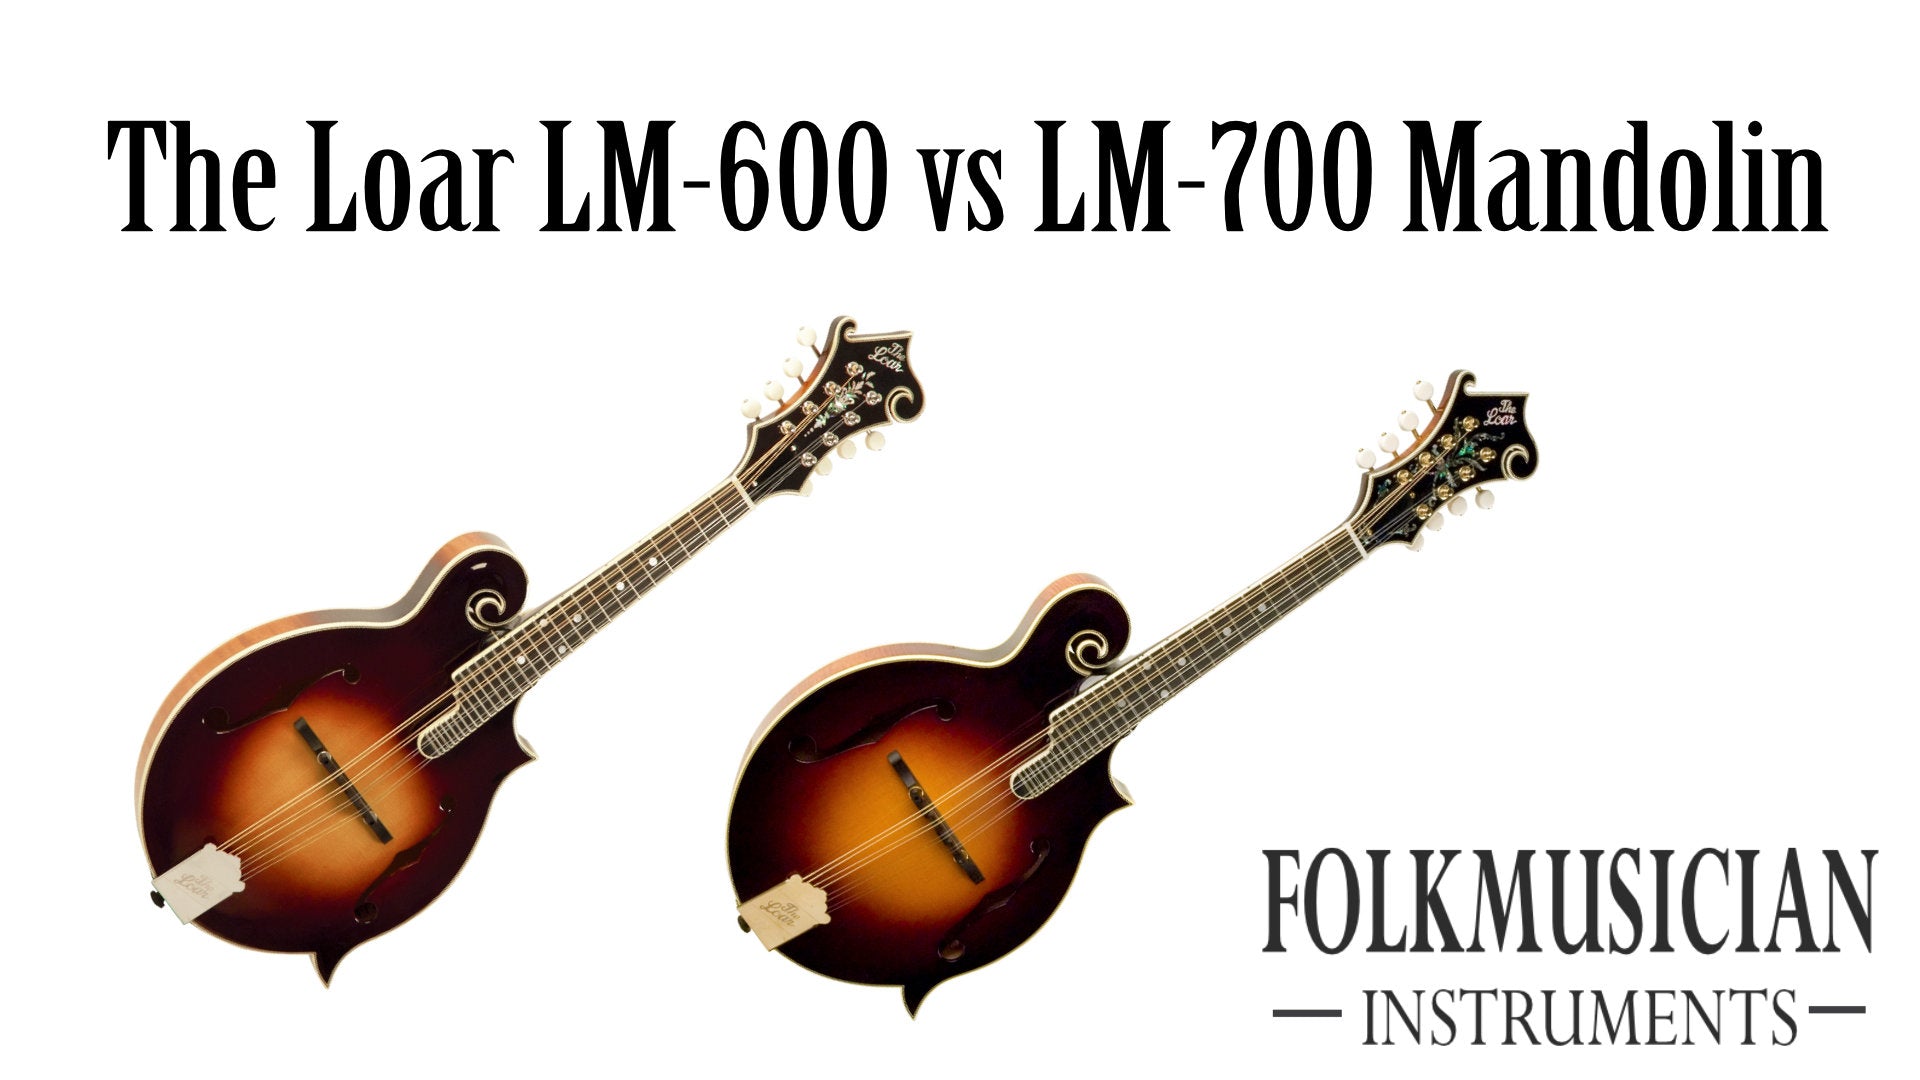 The Loar LM-600 vs LM-700 Mandolin - Folkmusician